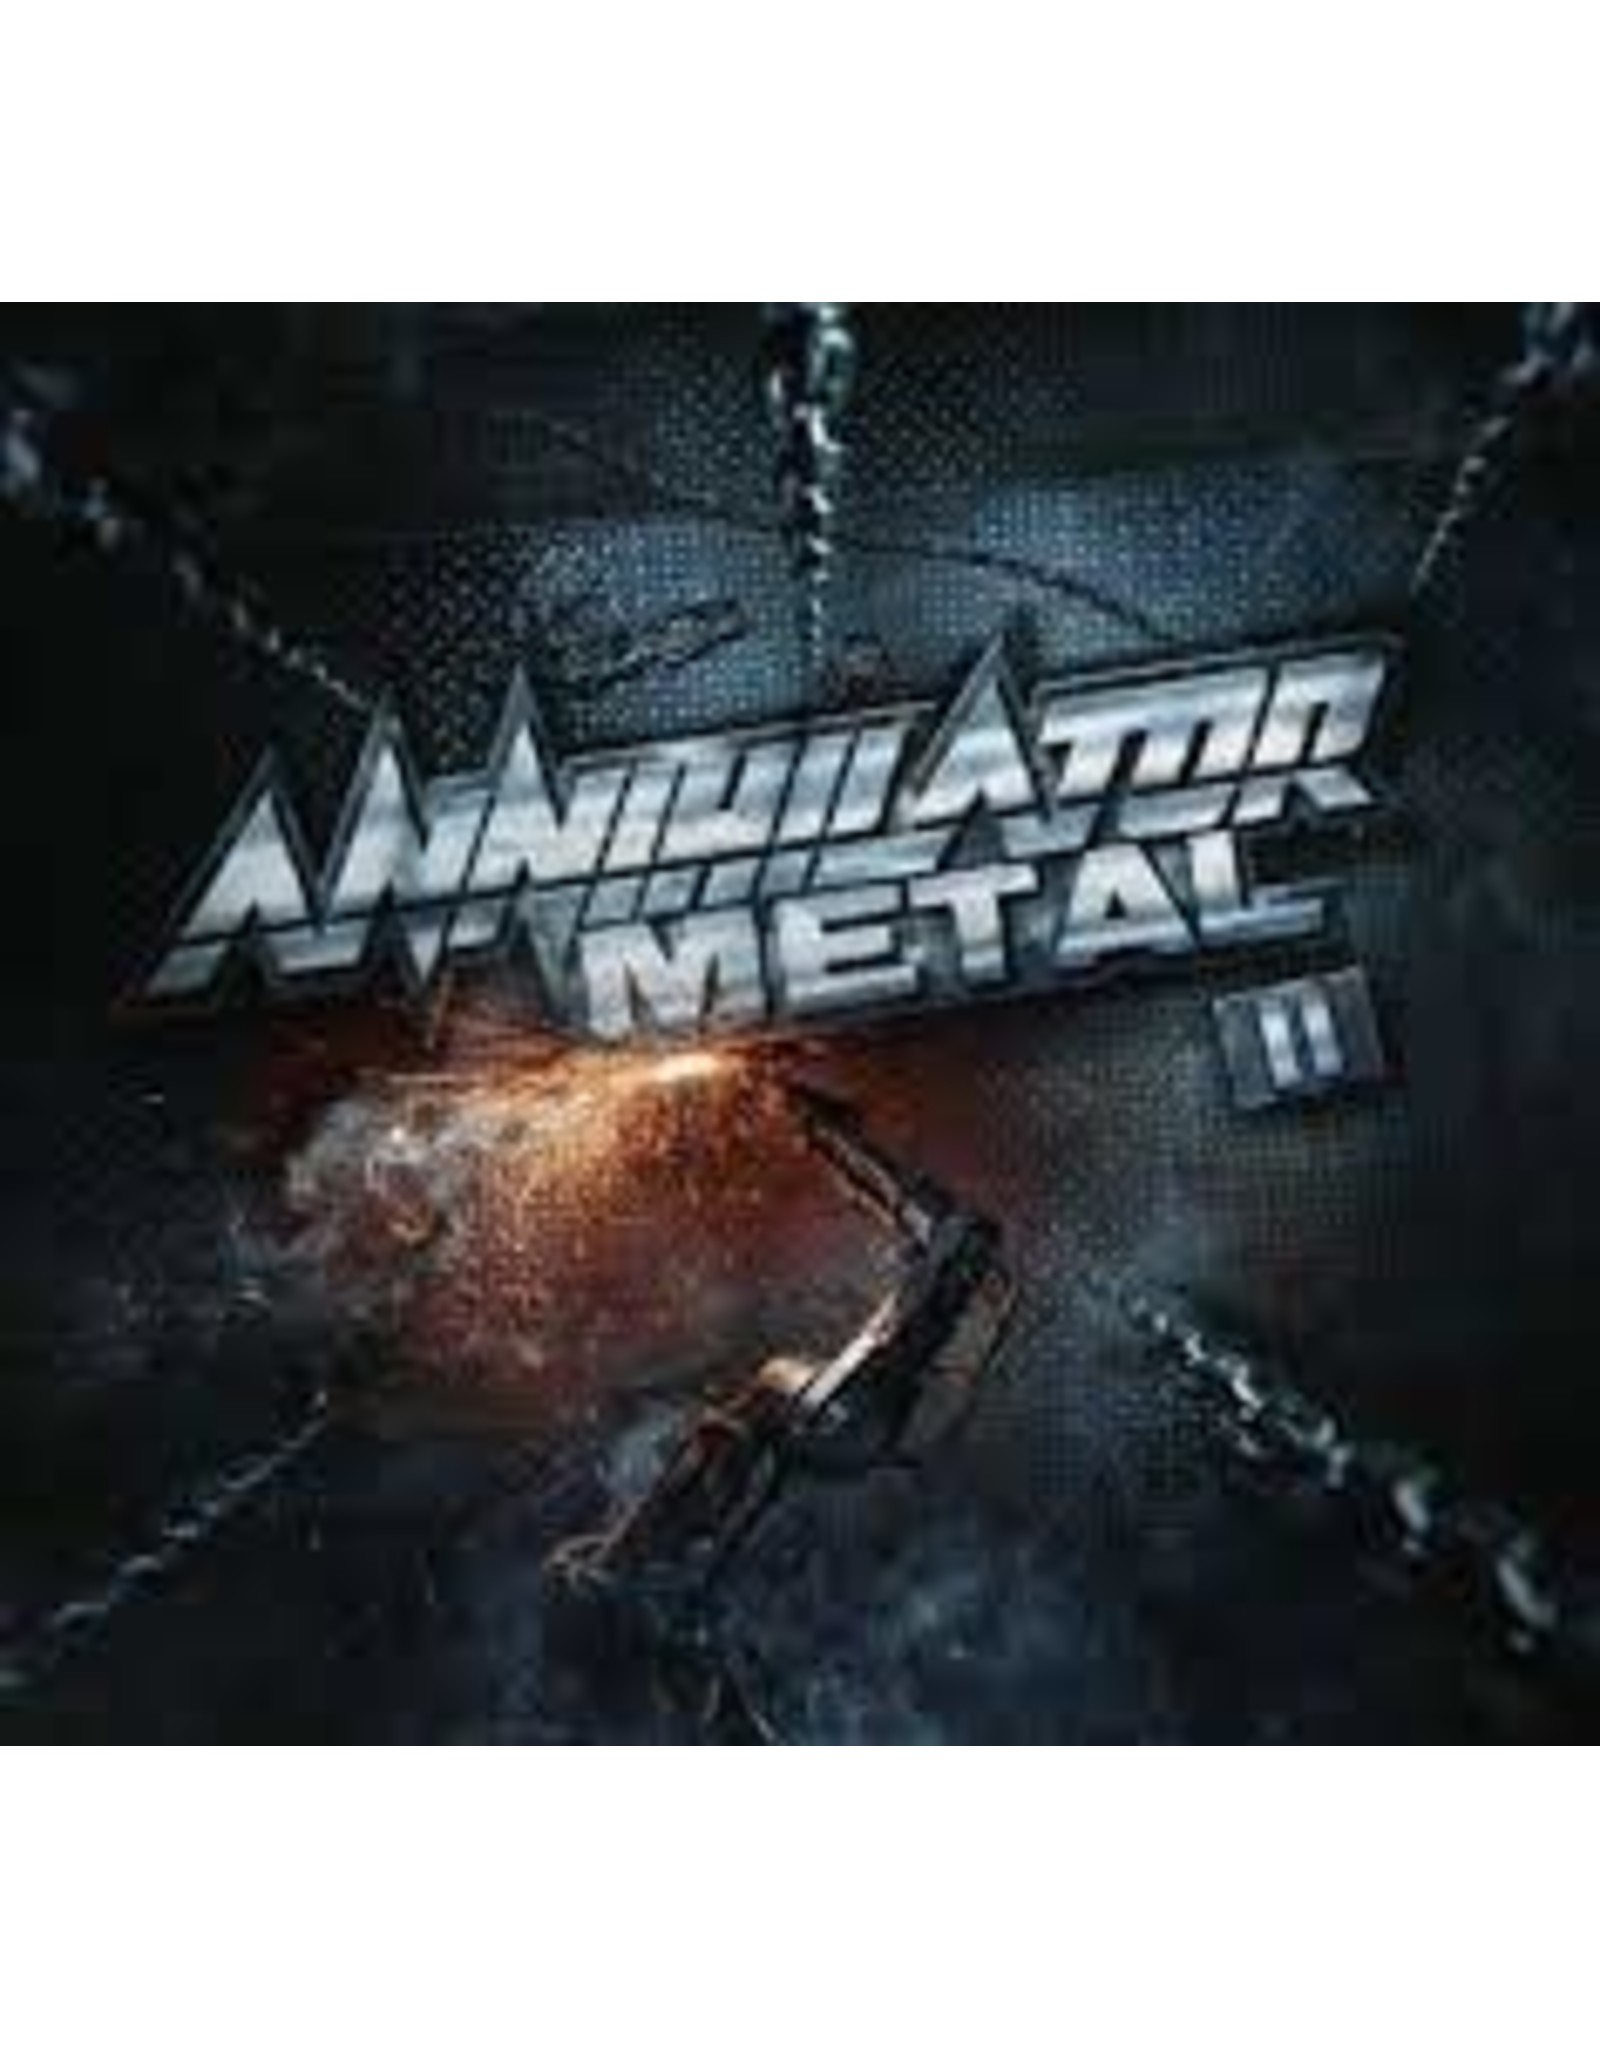 Annihilator - Metal II (2LP/Transparent orange/180g/Gatefold) Limited edition